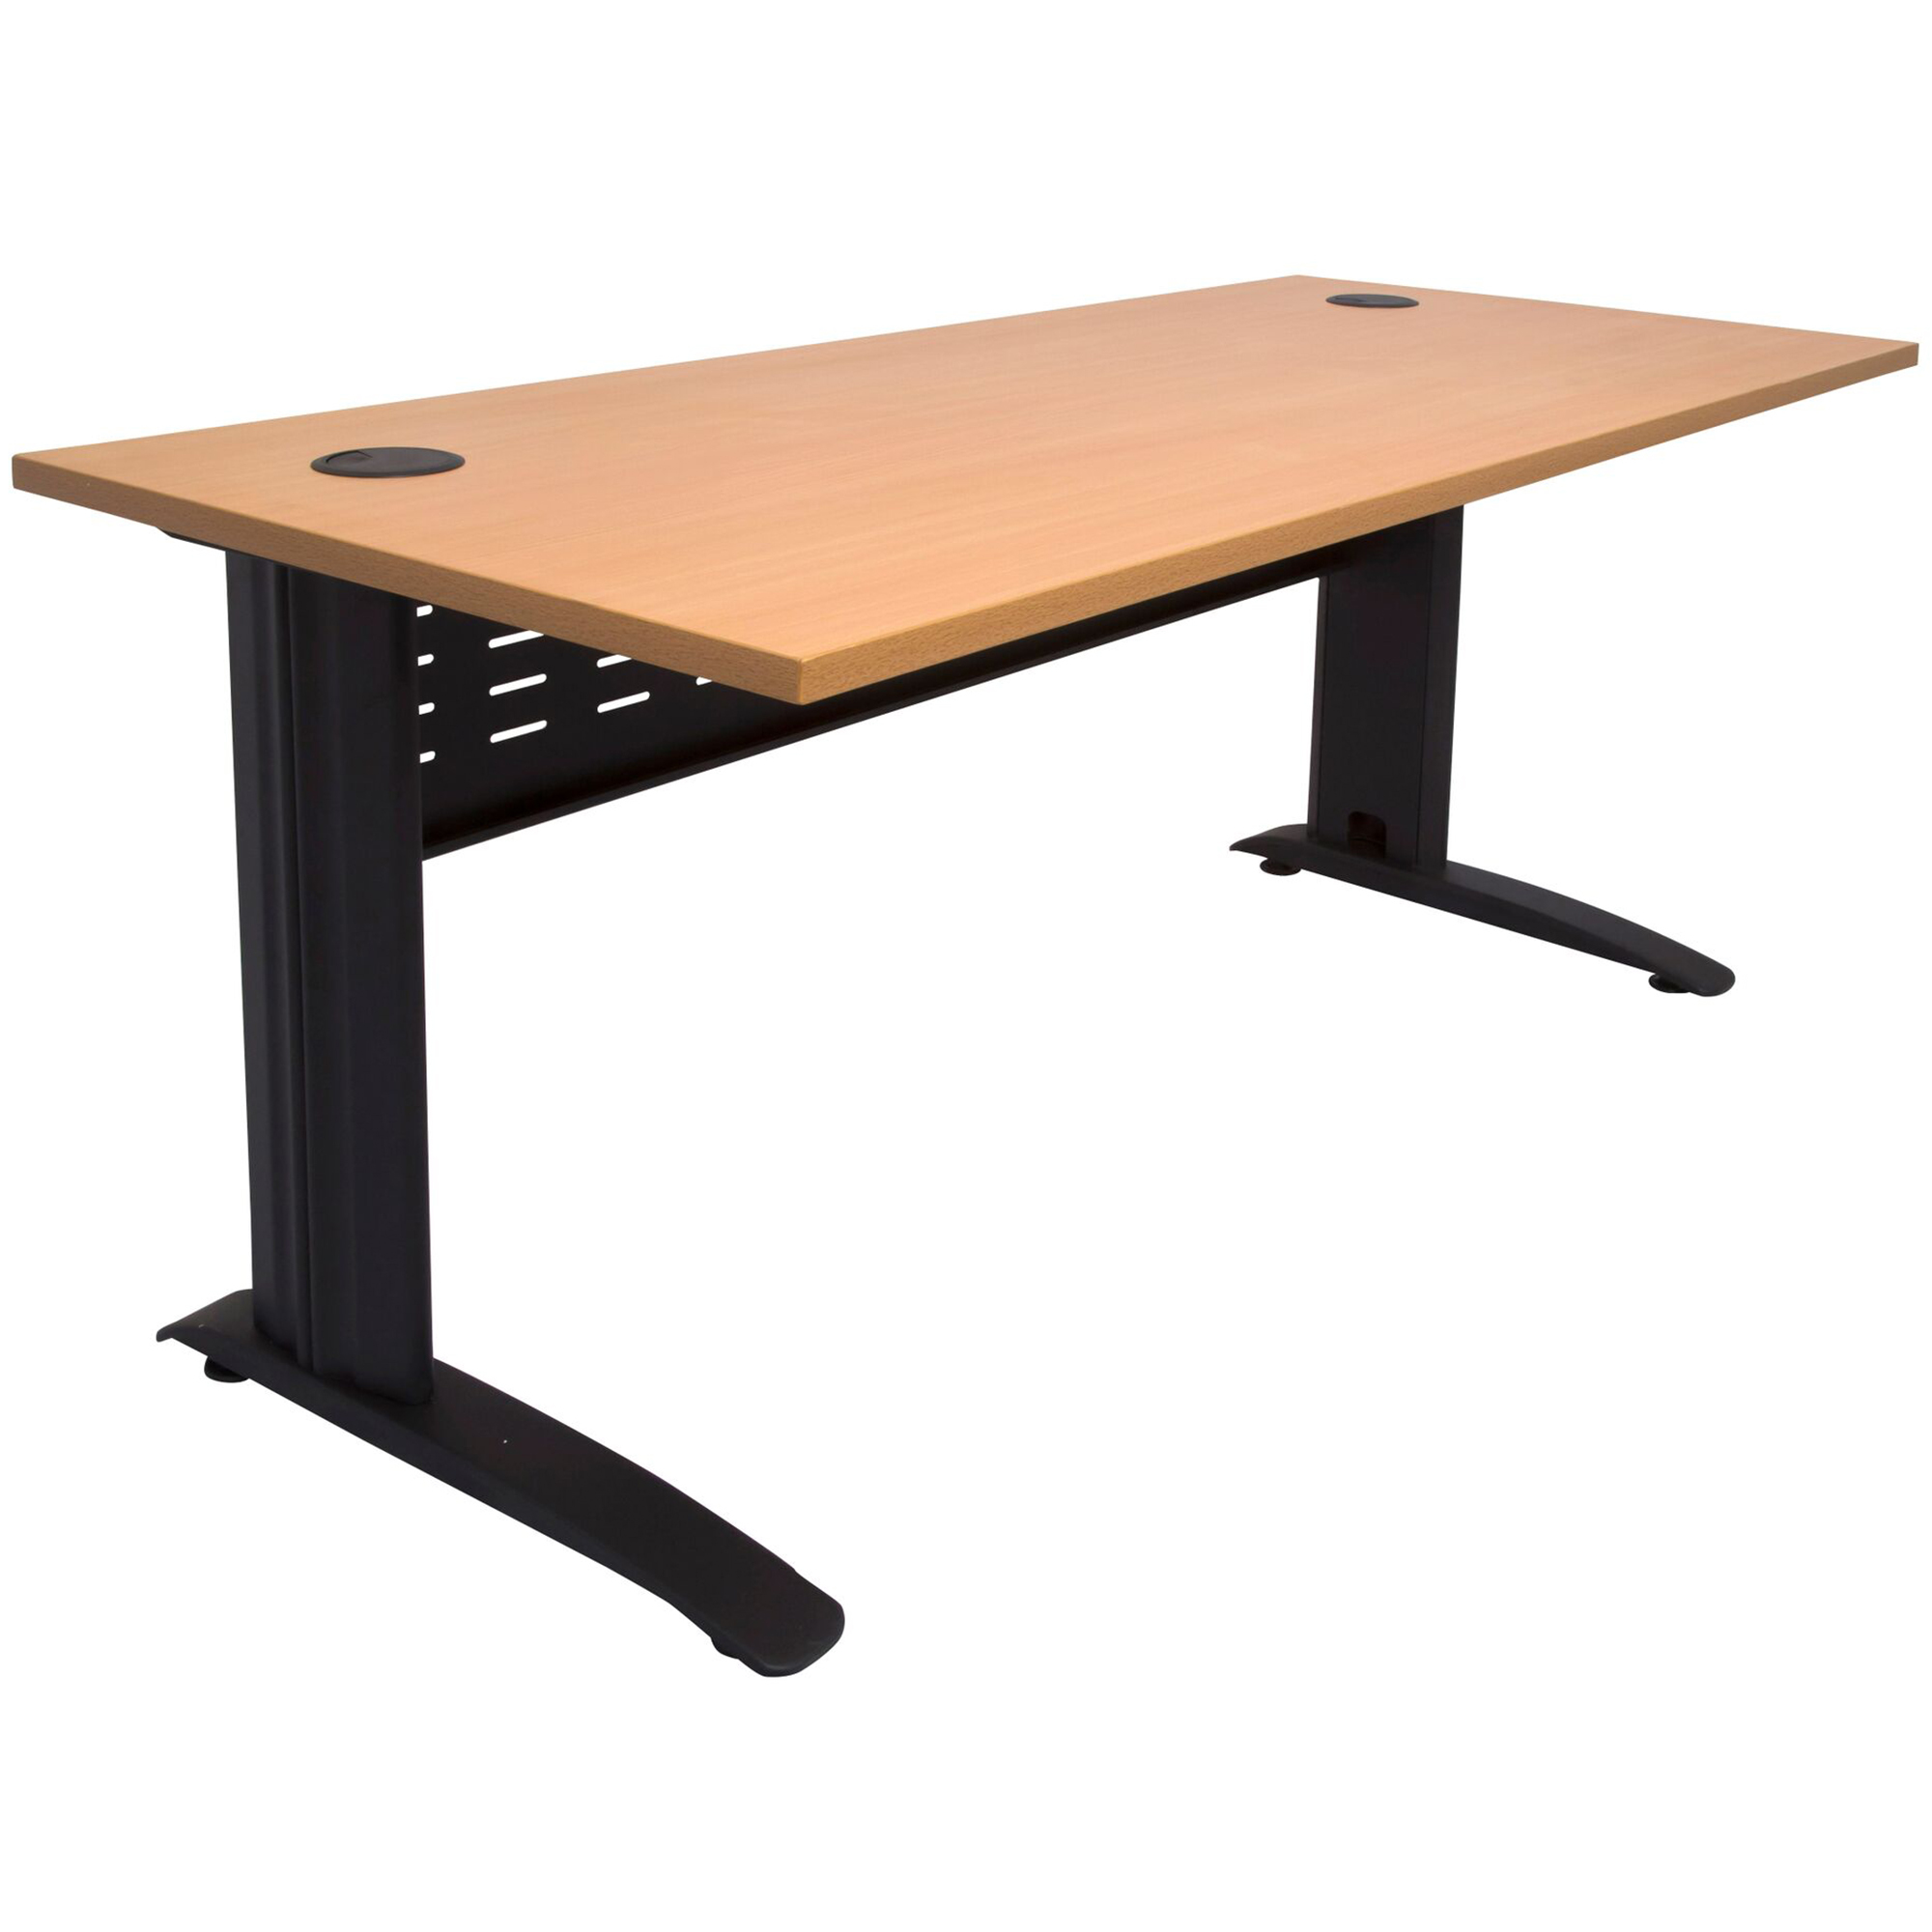 New Natural Top Lawson Span Desk Rein Office Desks Ebay